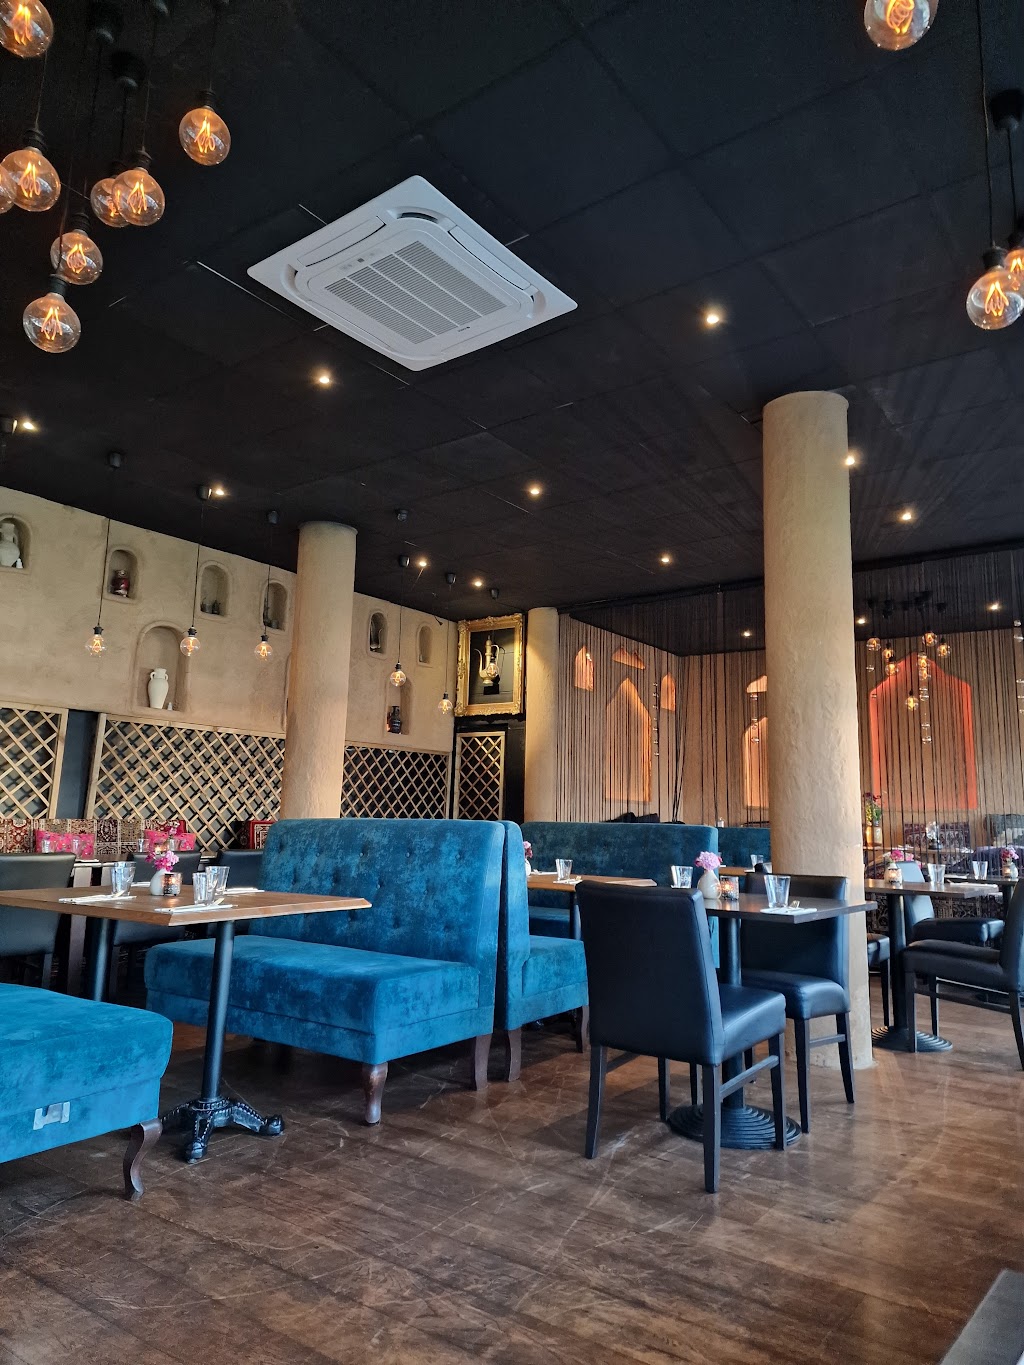 Afsana Afghaans Restaurant | Hillelaan 7, 3072 JA Rotterdam, Netherlands | Phone: 06 20395160